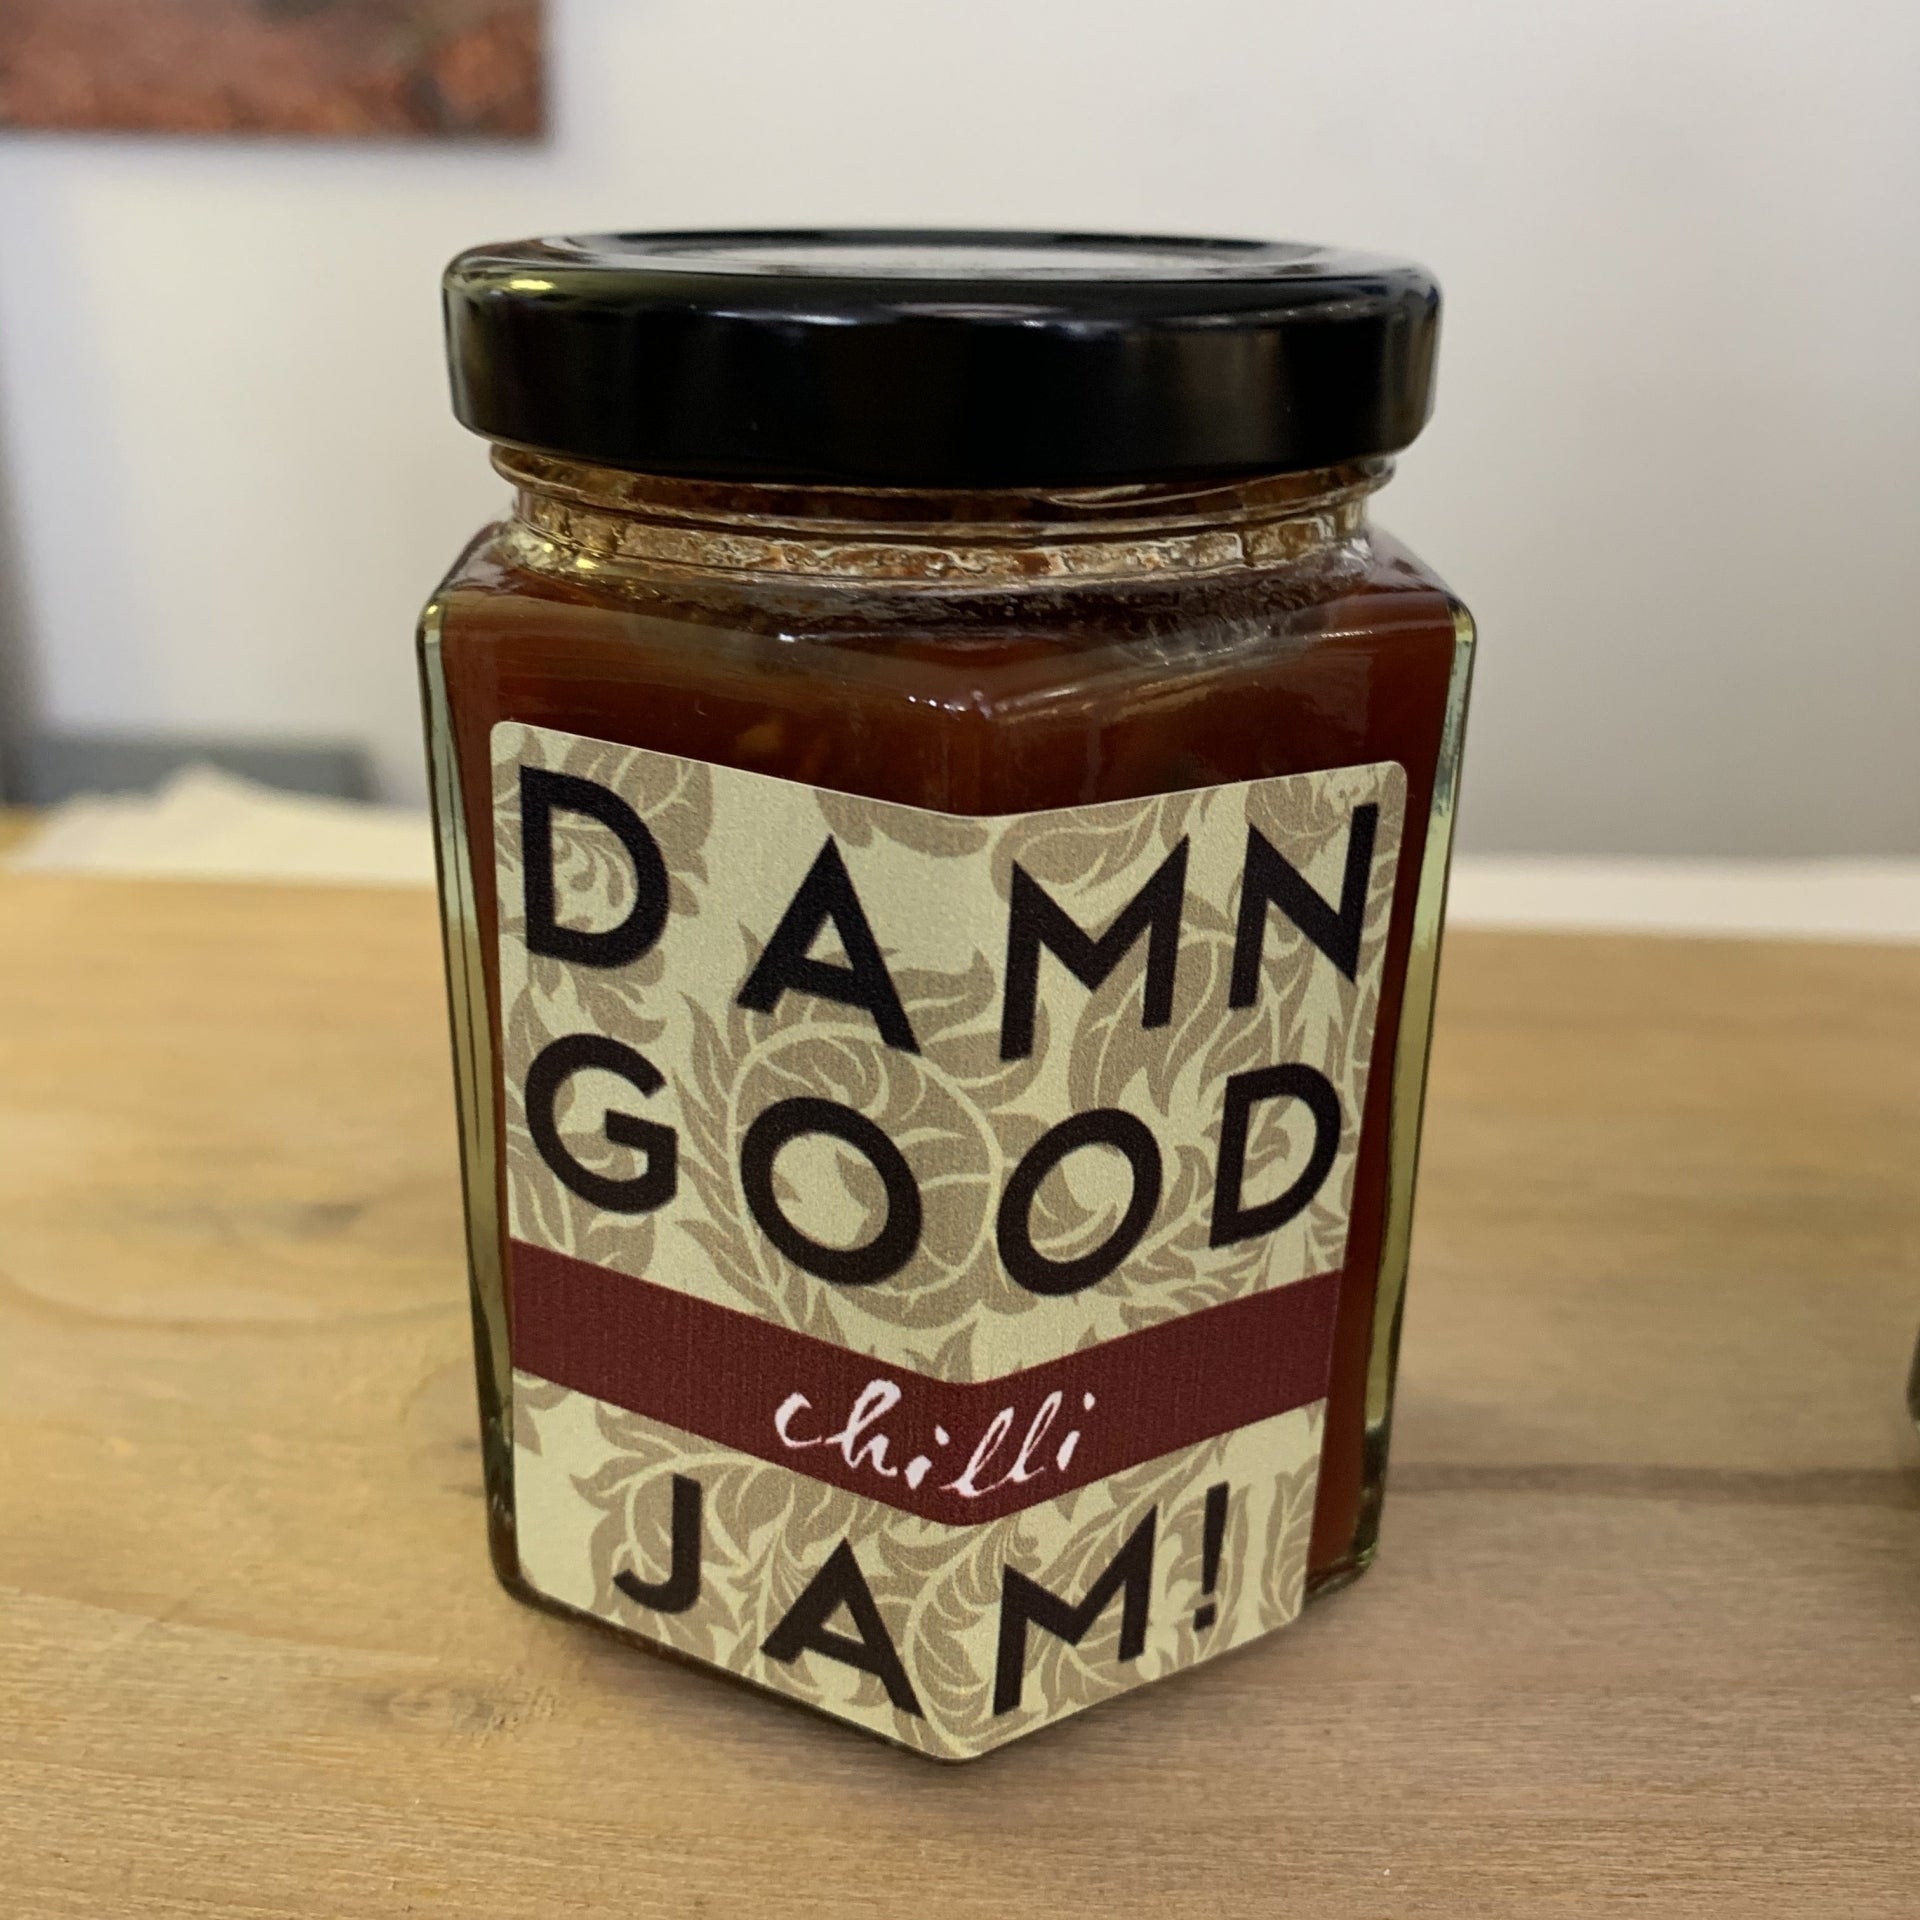 Chilli Jam By Damn Good Jam